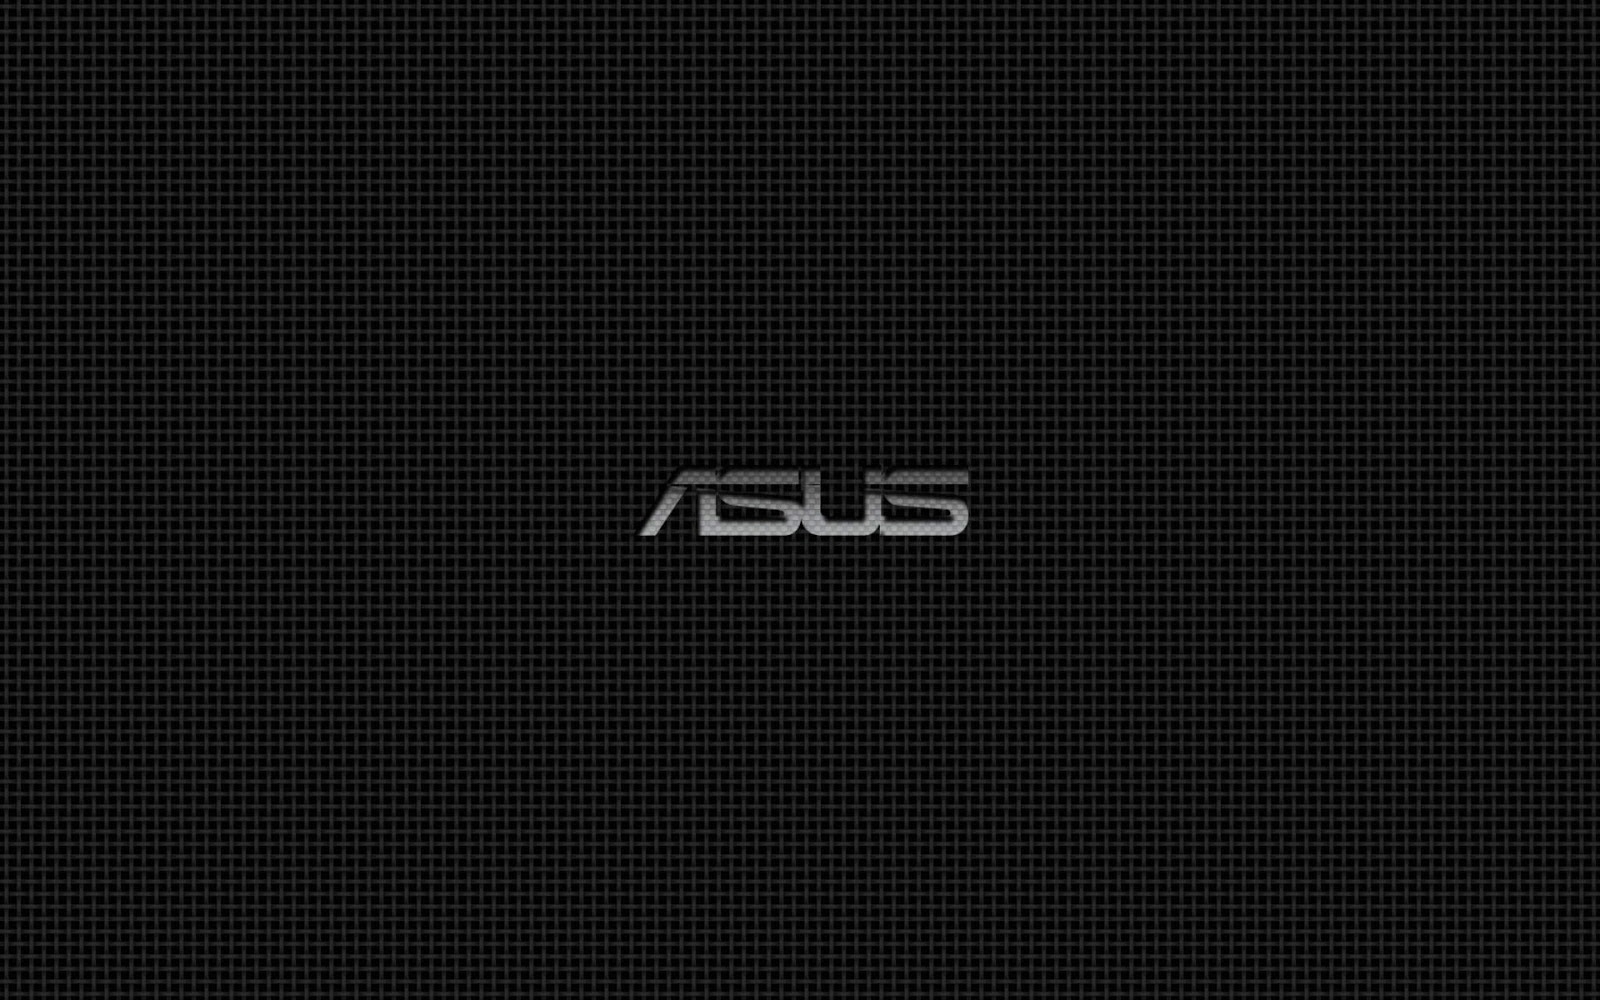 Asus Dark Background HD Wallpaper i03 1600x1000